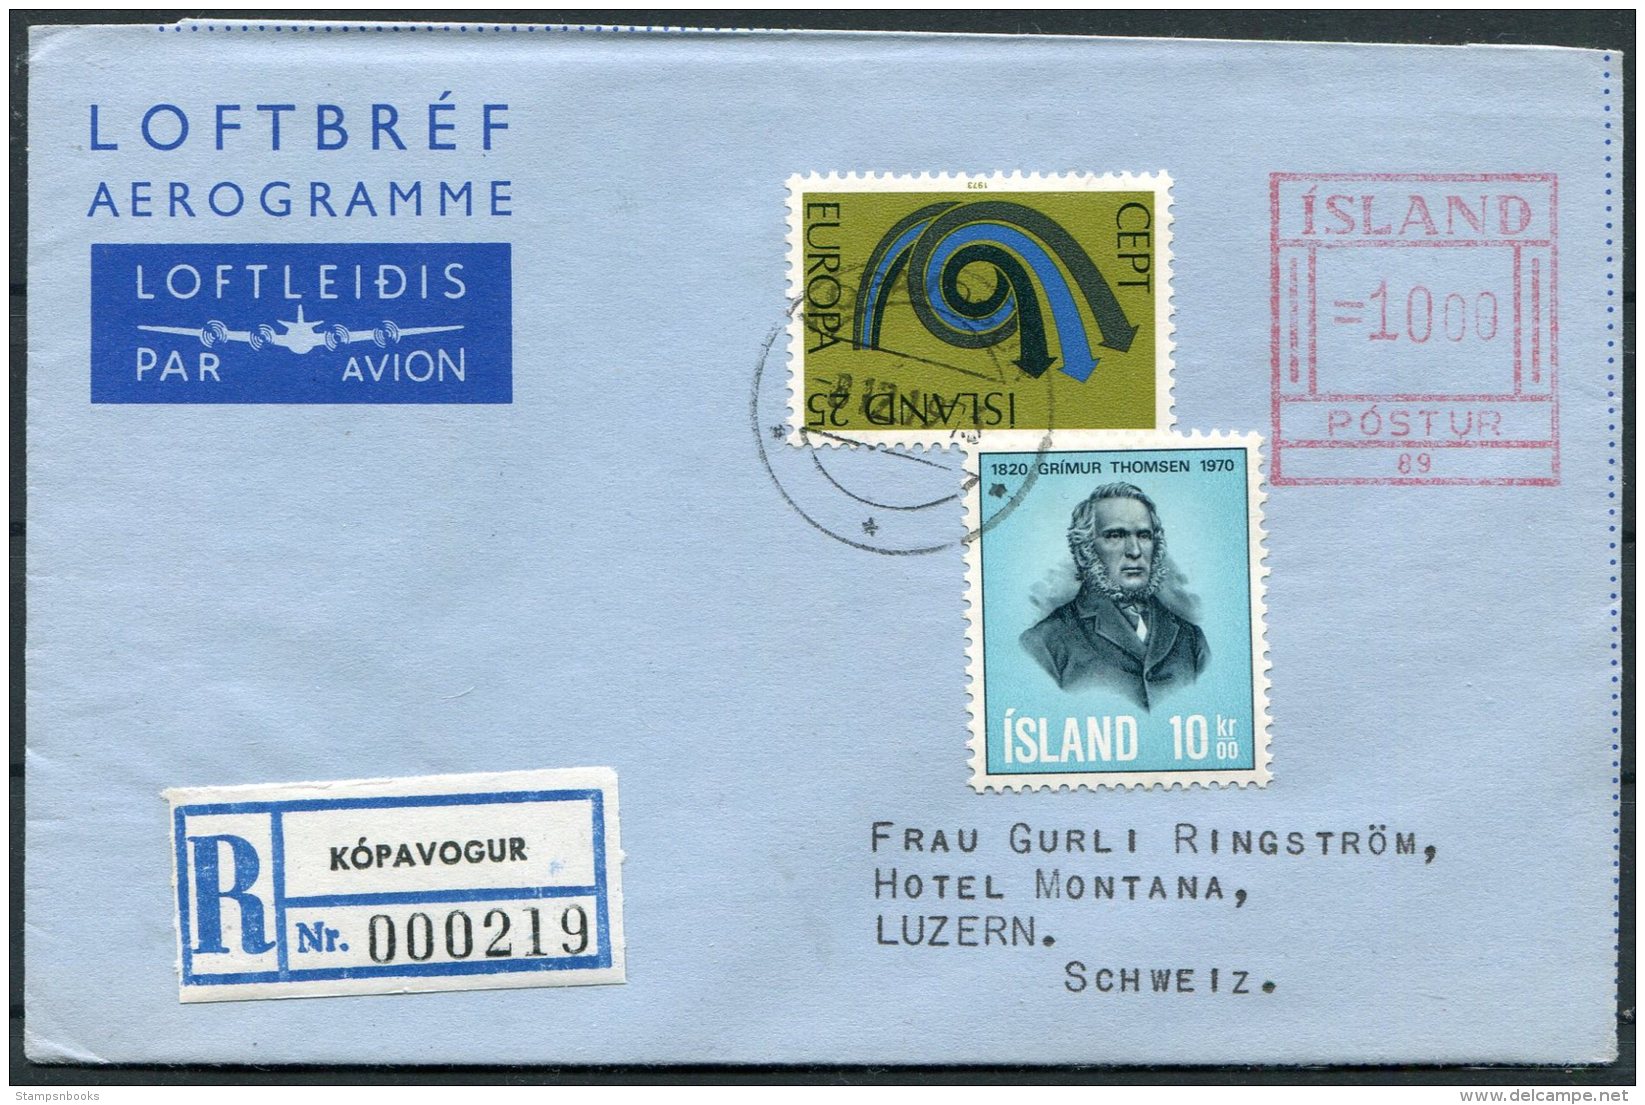 1973 Iceland Aerogramme Postur Registered Kopavogur - Hotel Montana, Luzern, Switzerland Europa - Covers & Documents